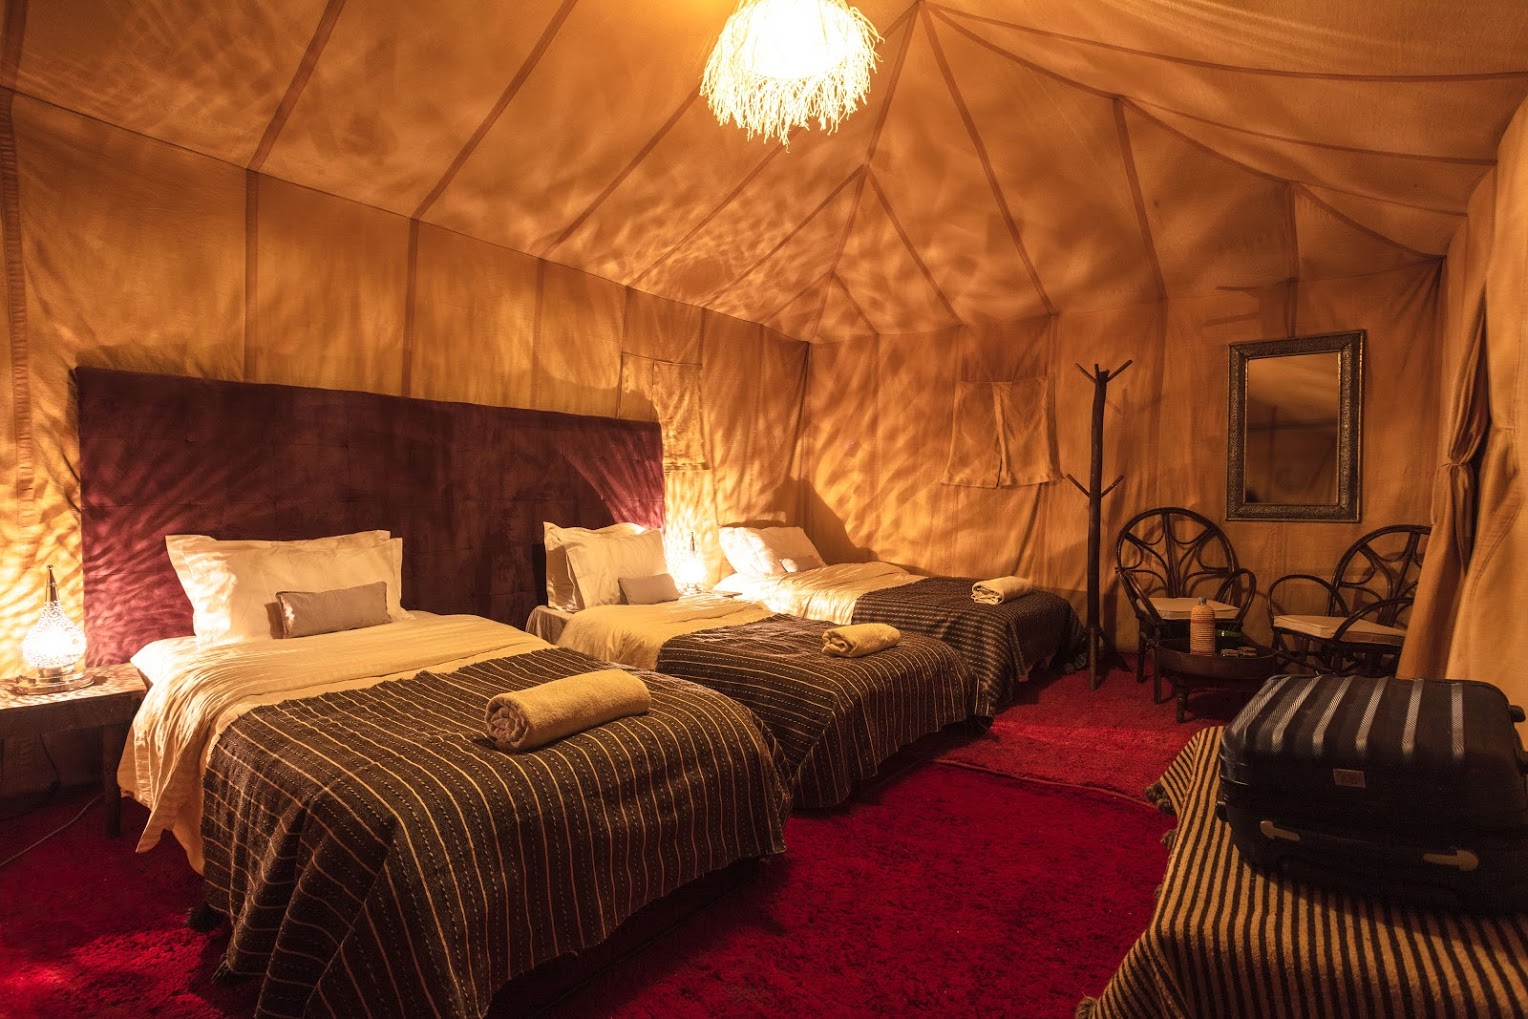 Erg chigaga comfortable camp in the desert torza